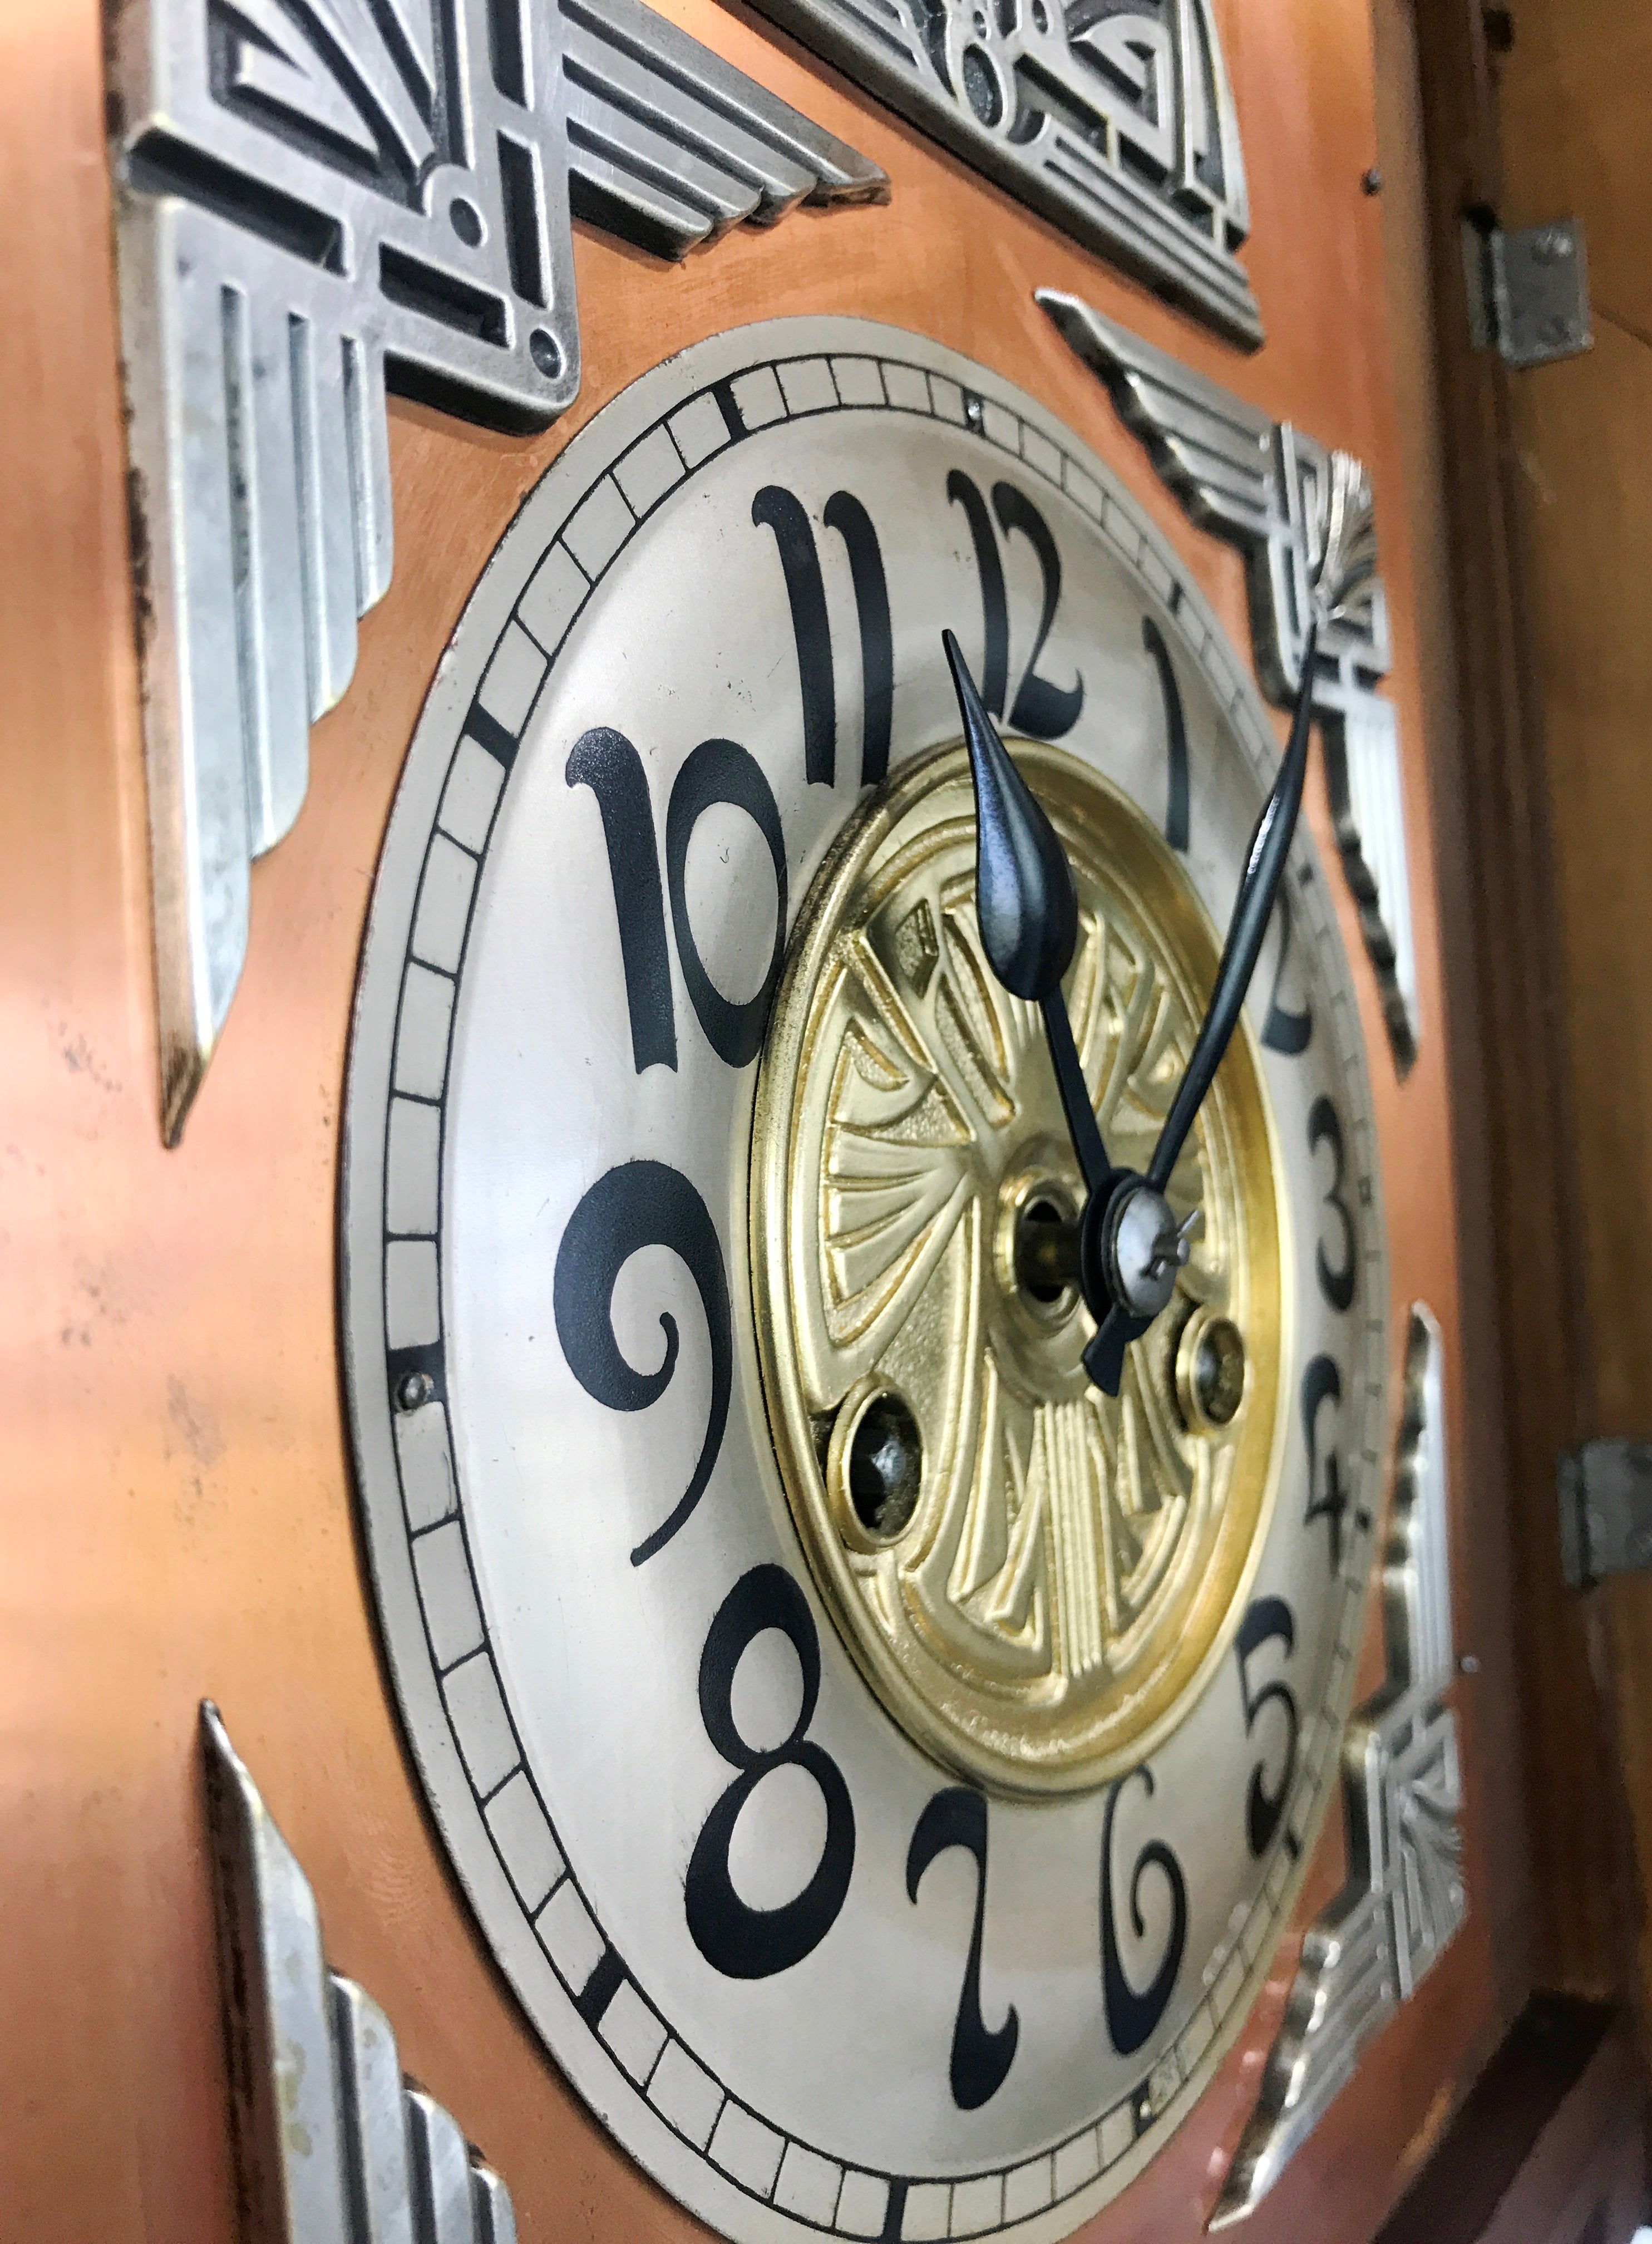 Original Antique HAC Wall Clock | eXibit collection